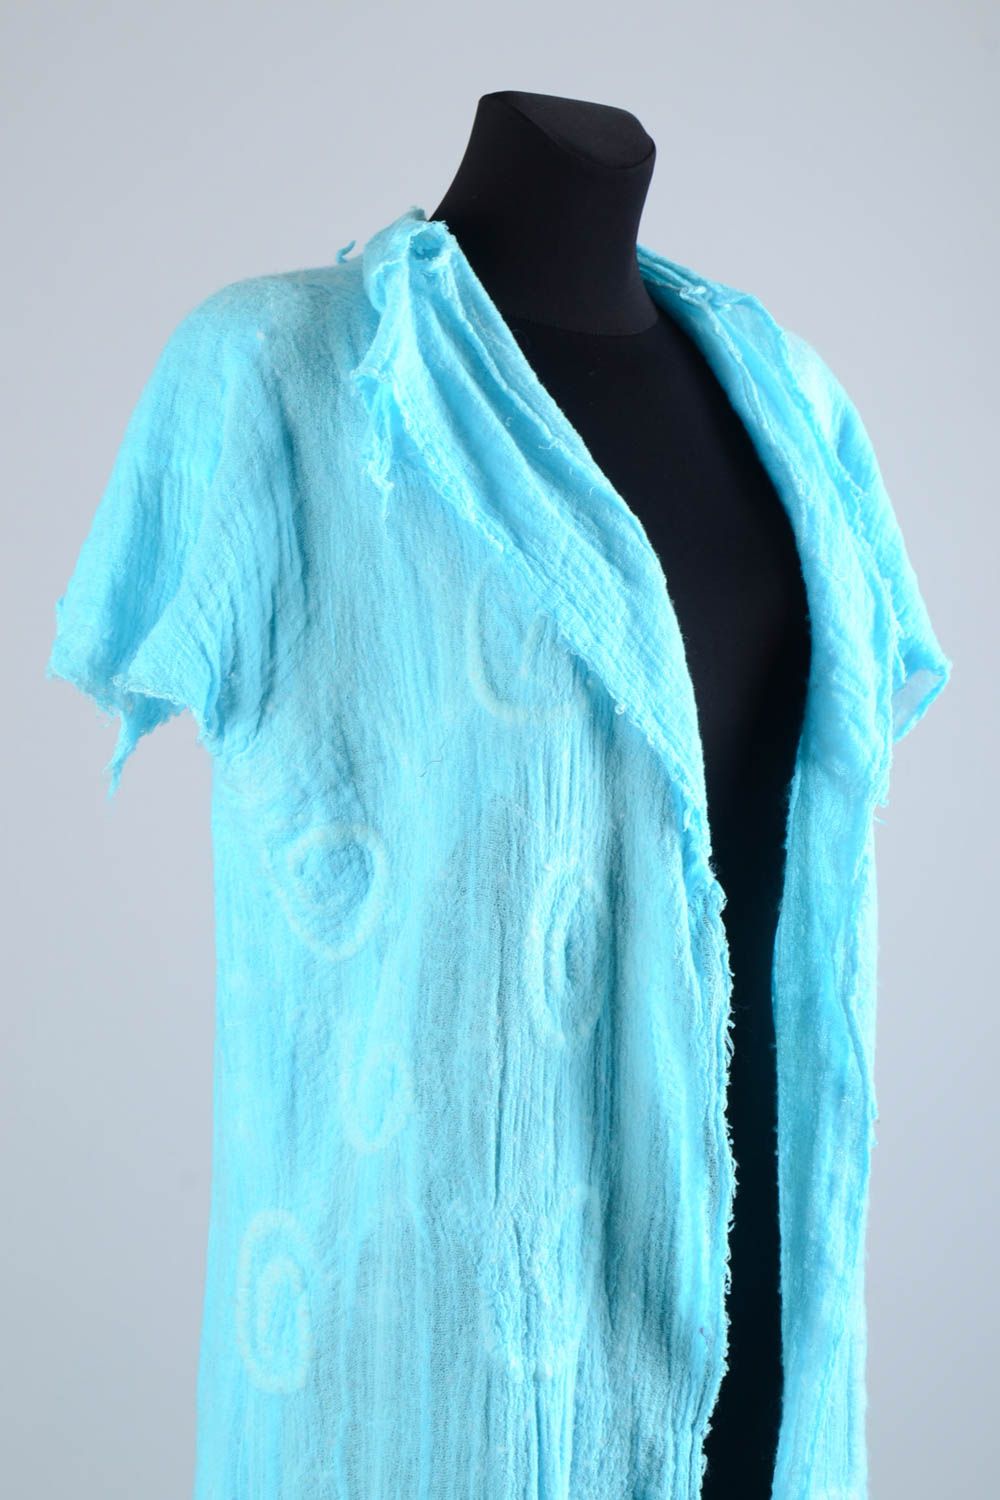 Handmade wraps designer wraps women wraps summer clothes gift for women photo 2